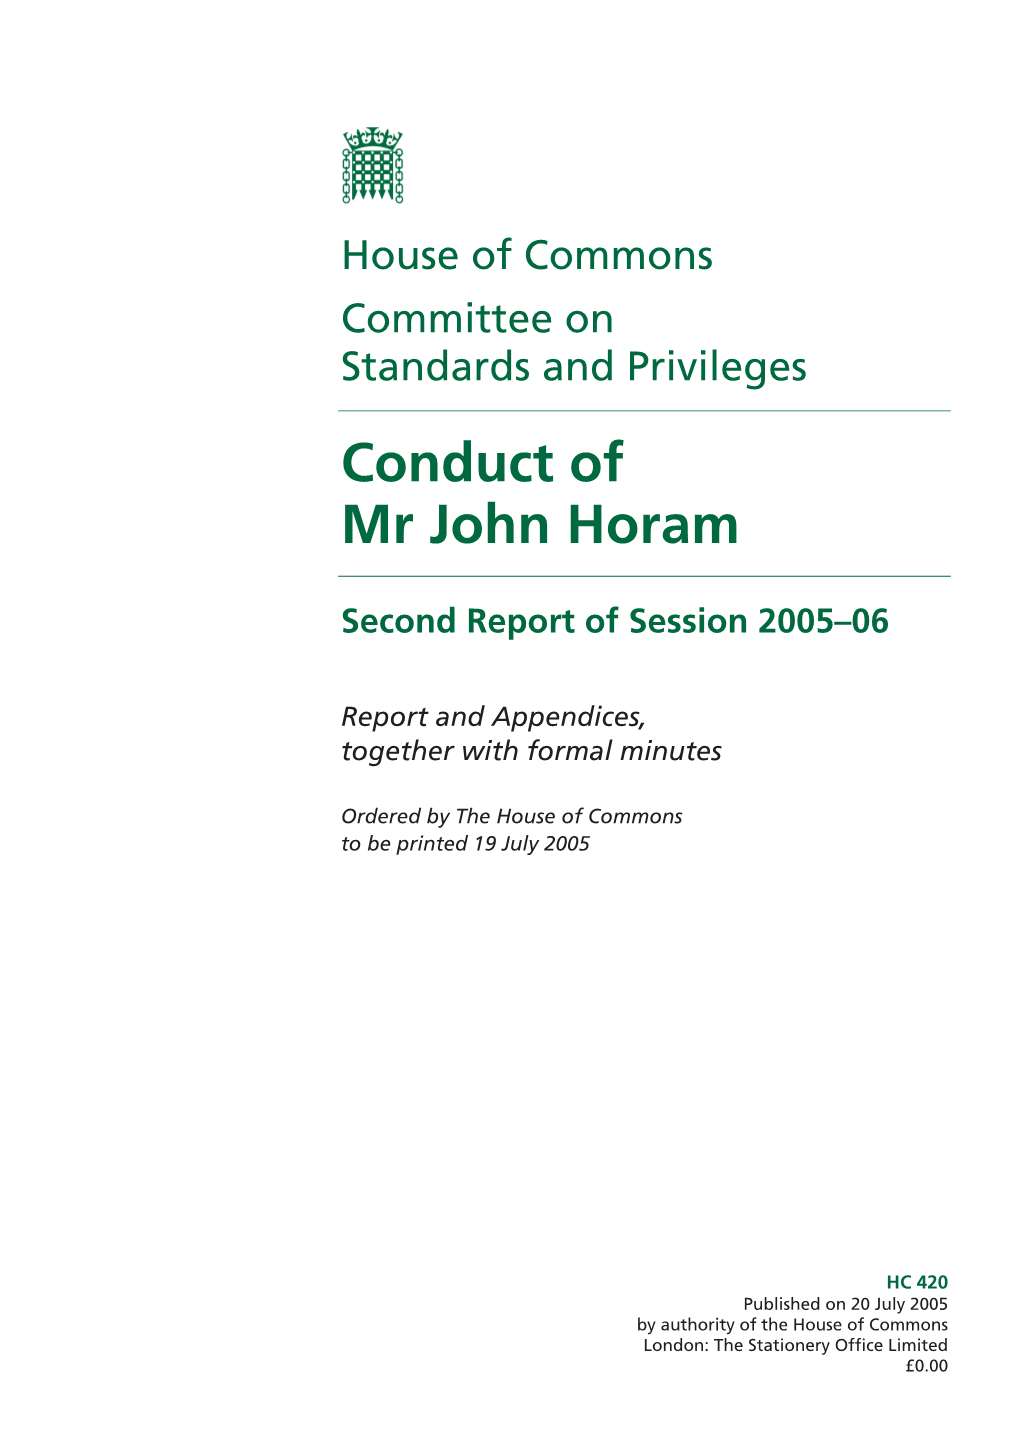 Conduct of Mr John Horam